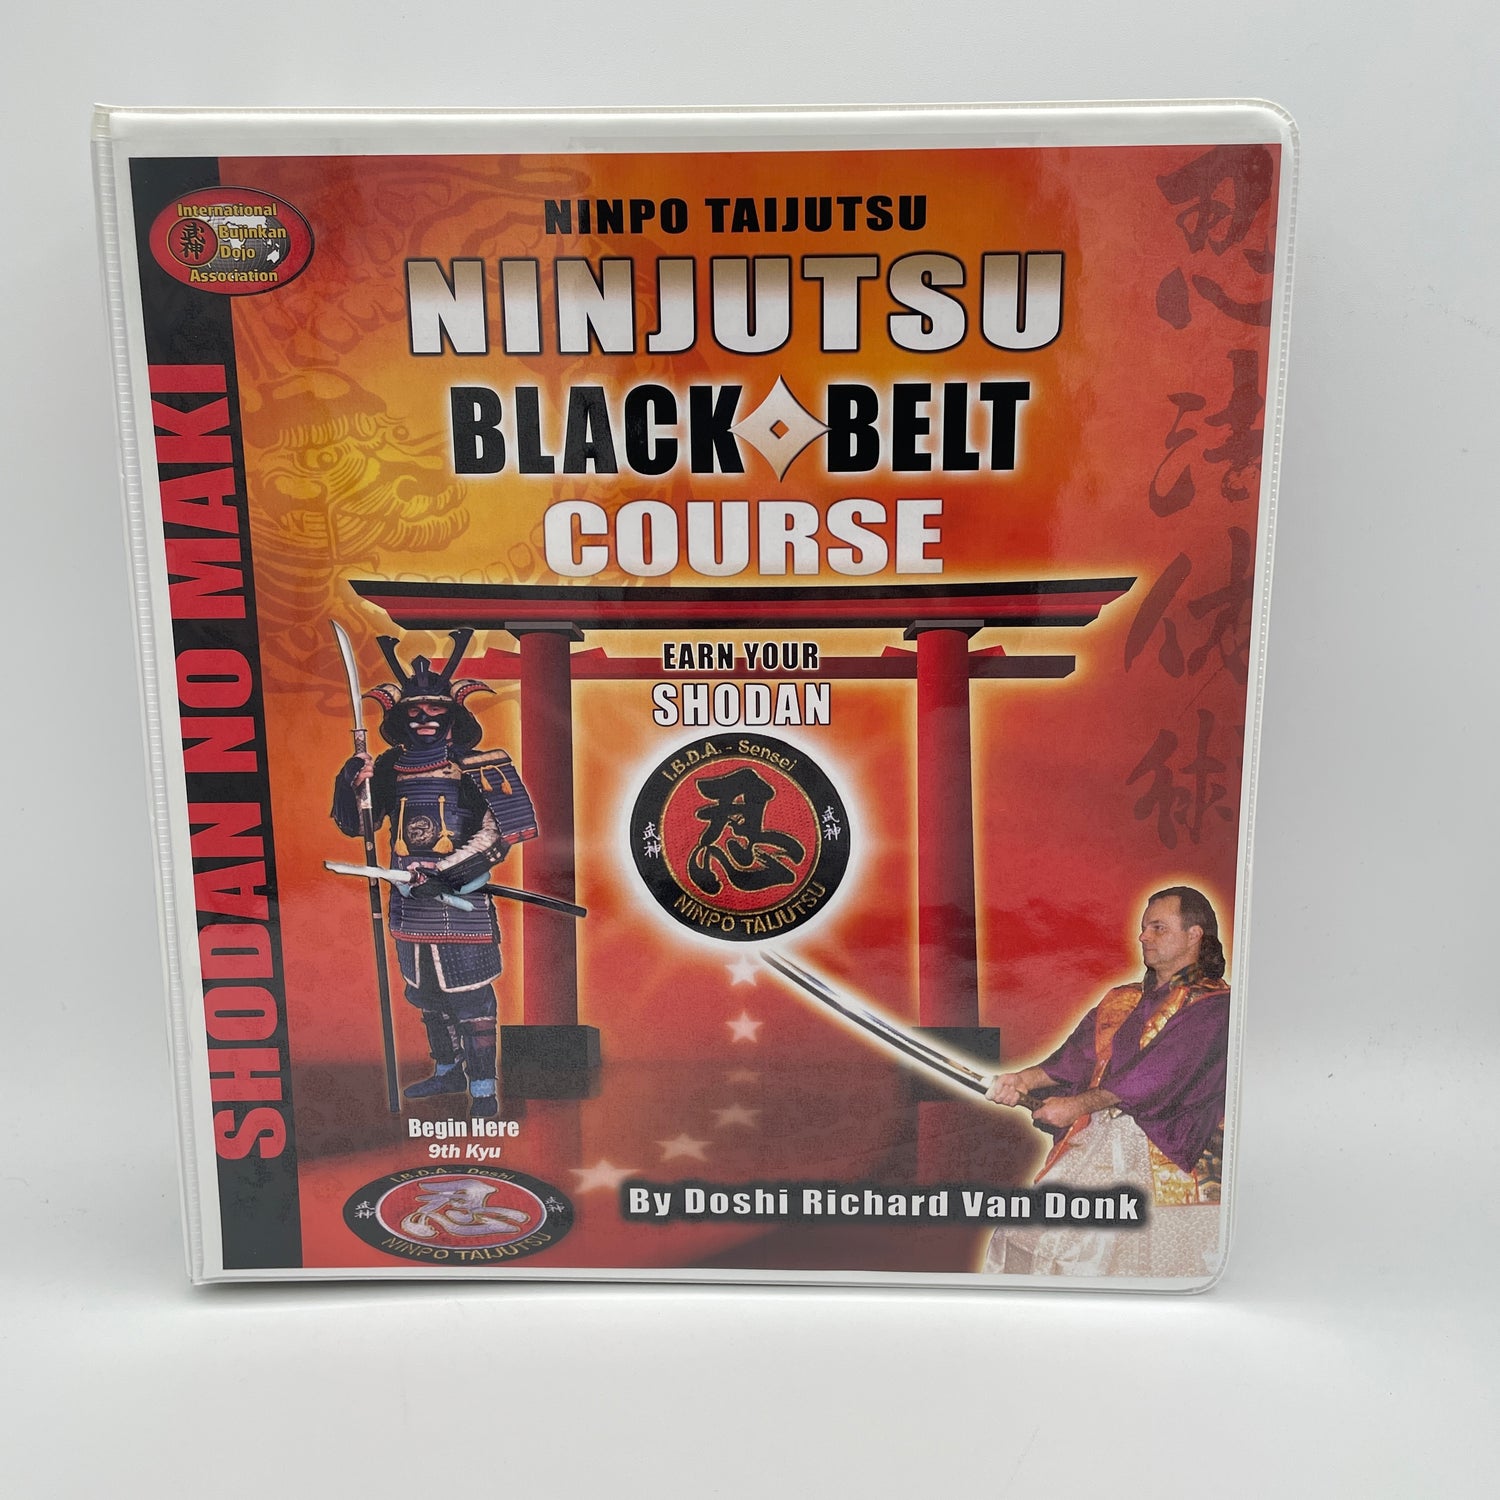 Ninjutsu Black Belt Home Study Course by Richard Van Donk